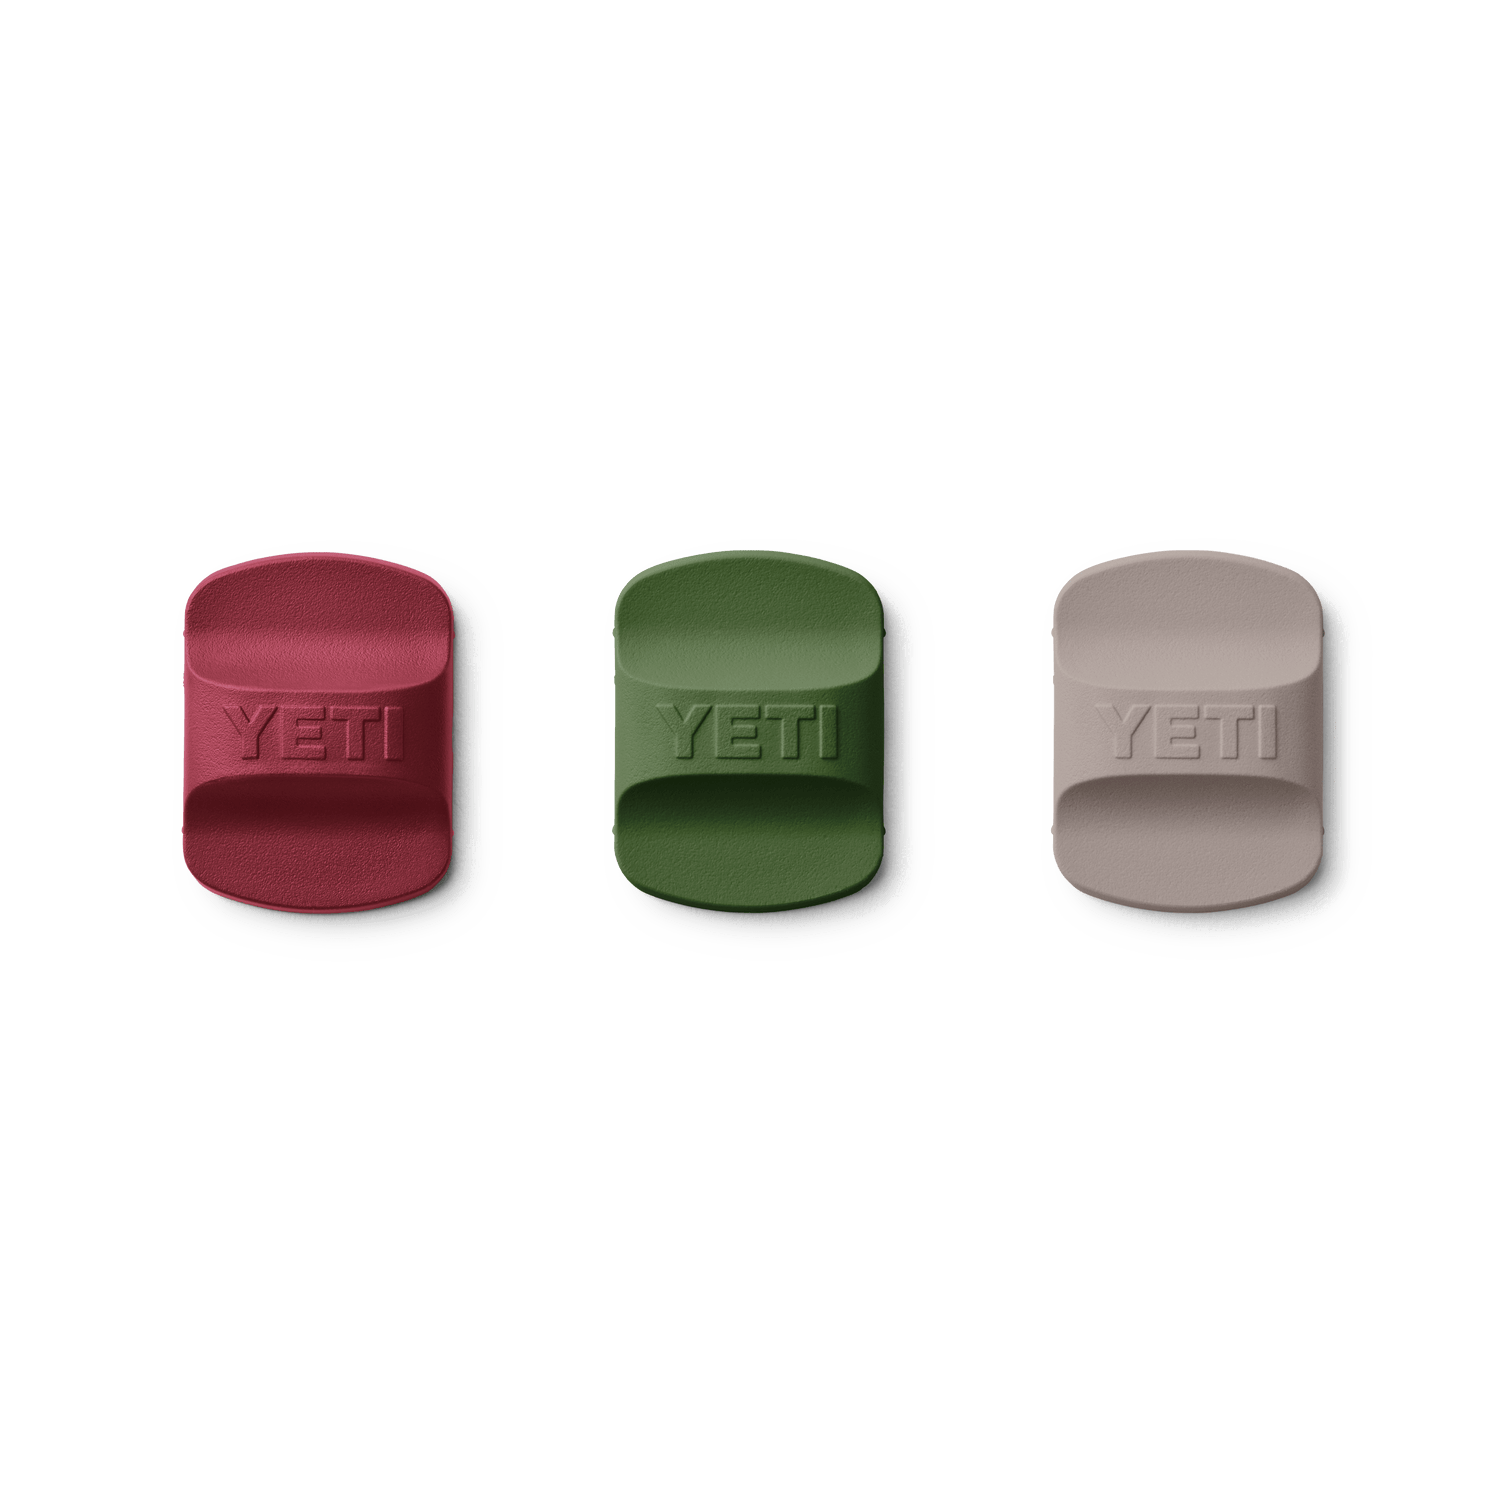 Yeti Rambler Magslider Color Pack